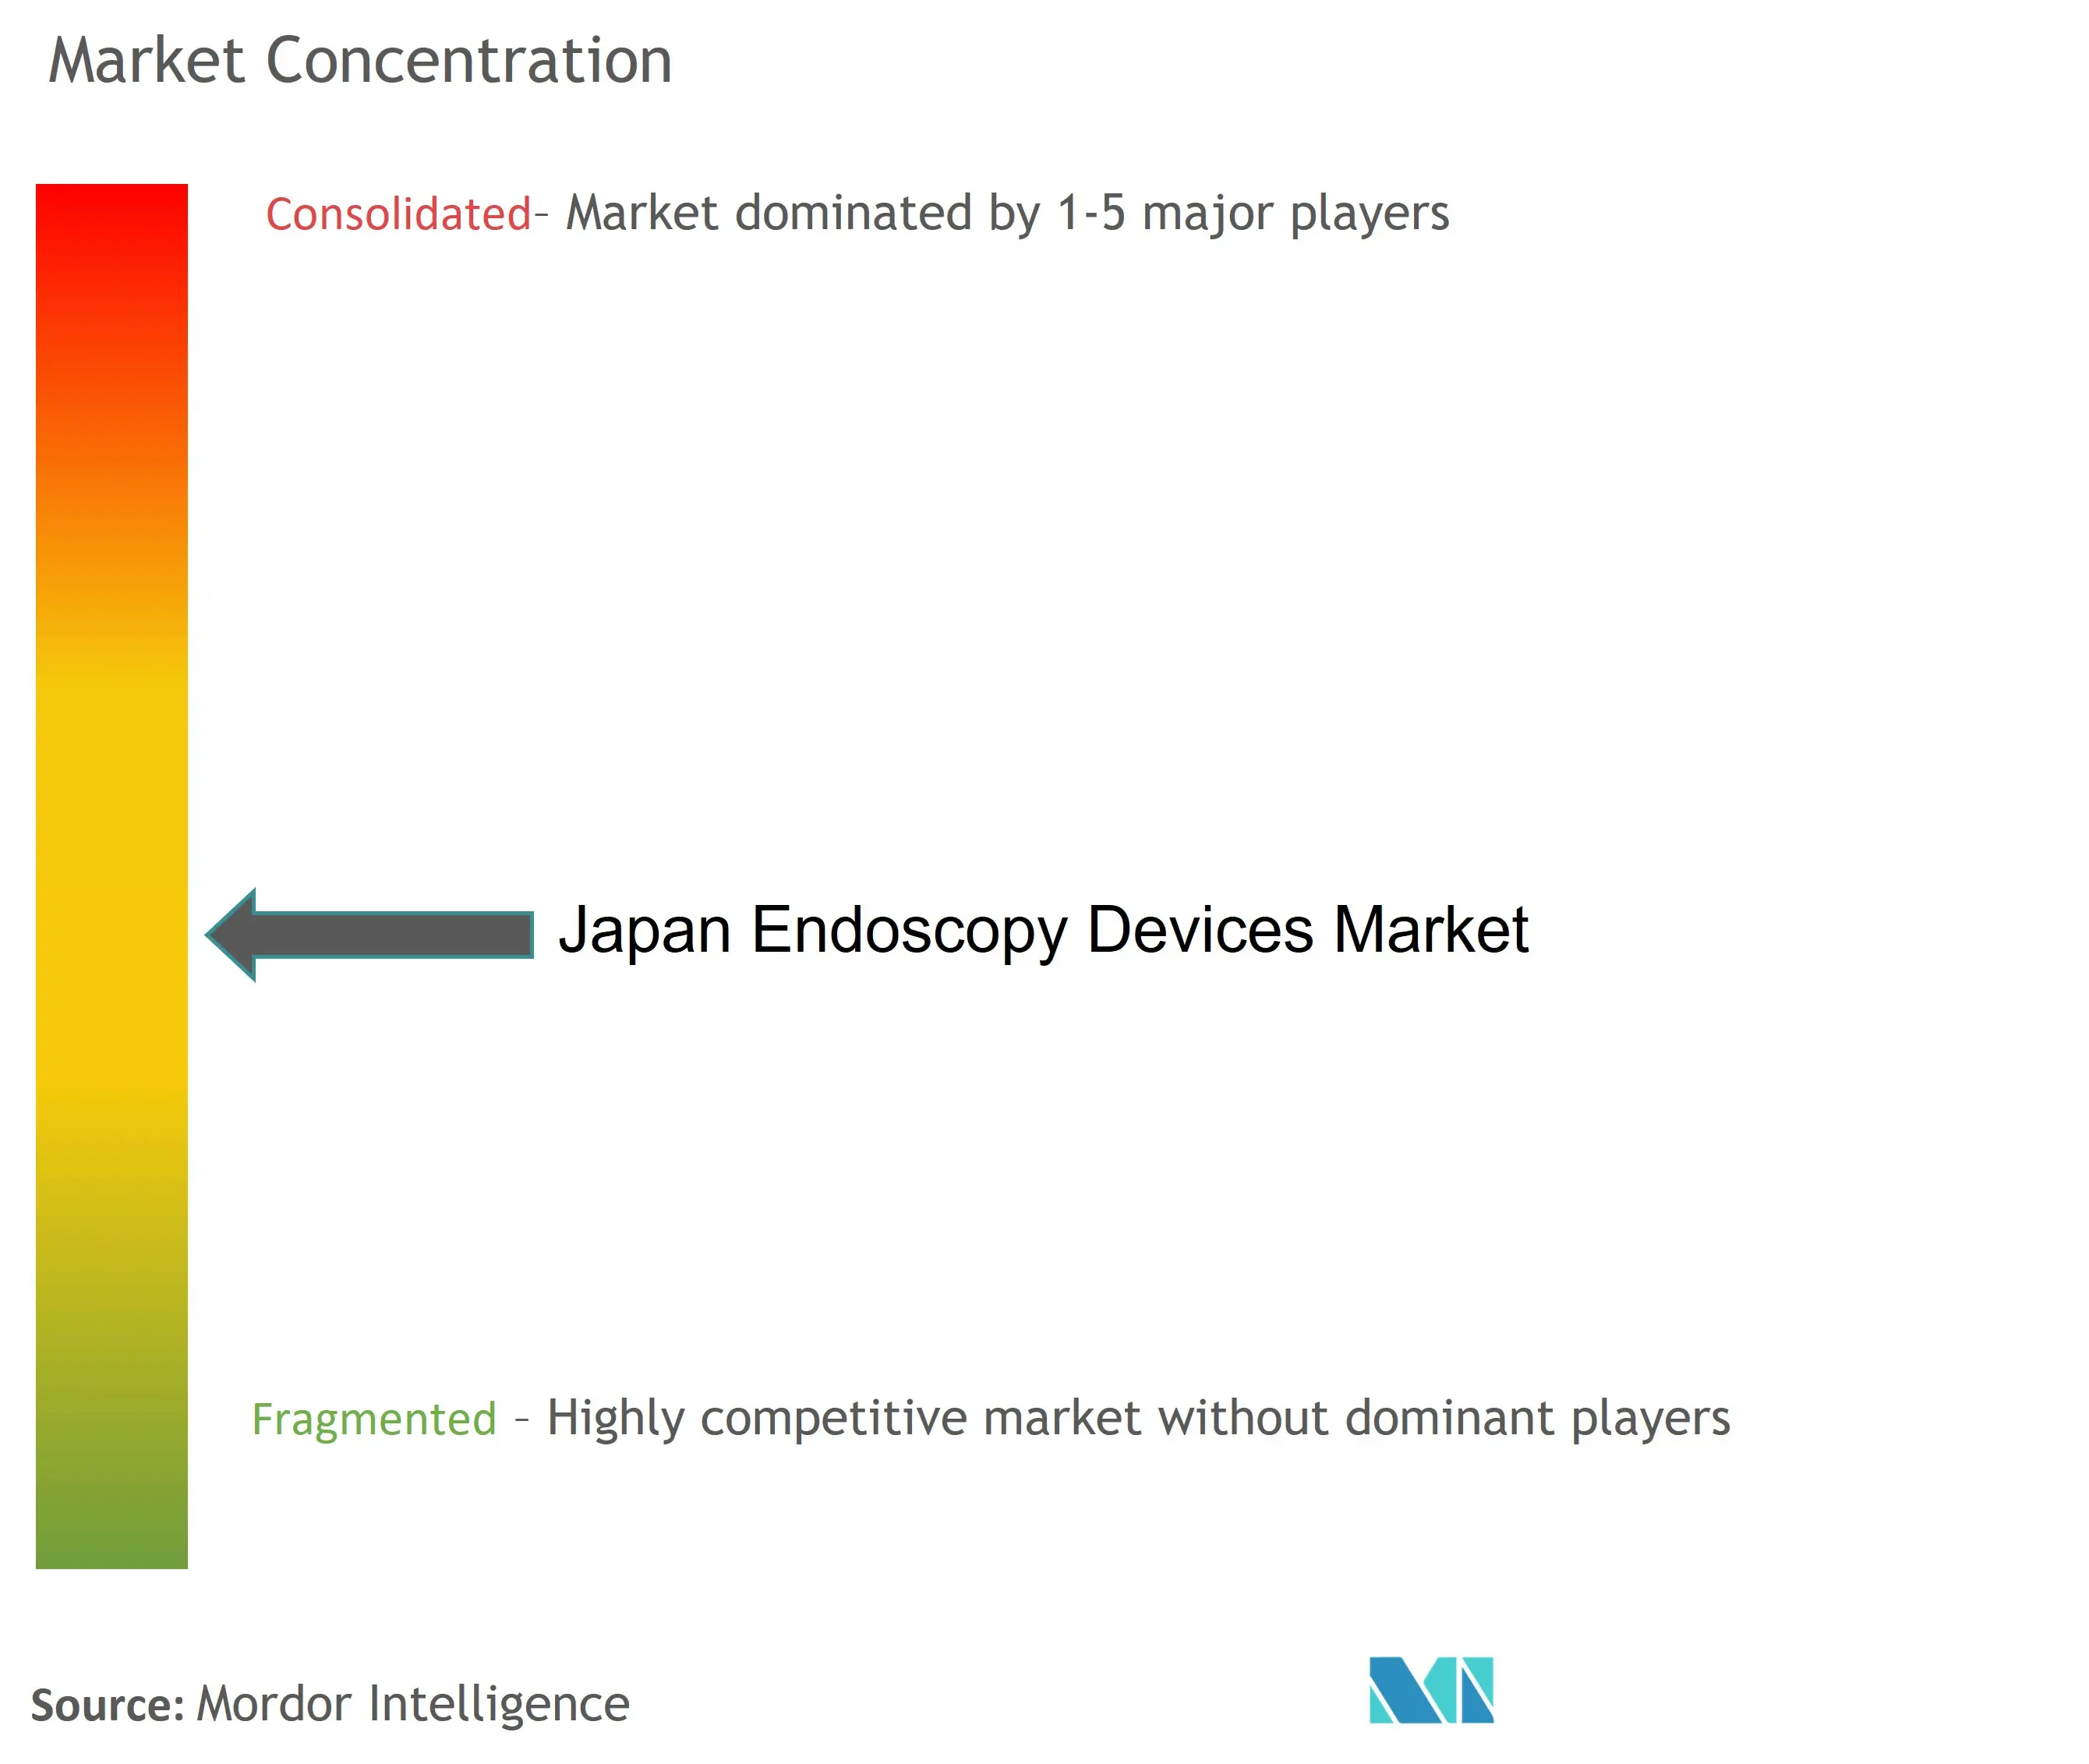 Japan Endoscopy Devices Market Concentration